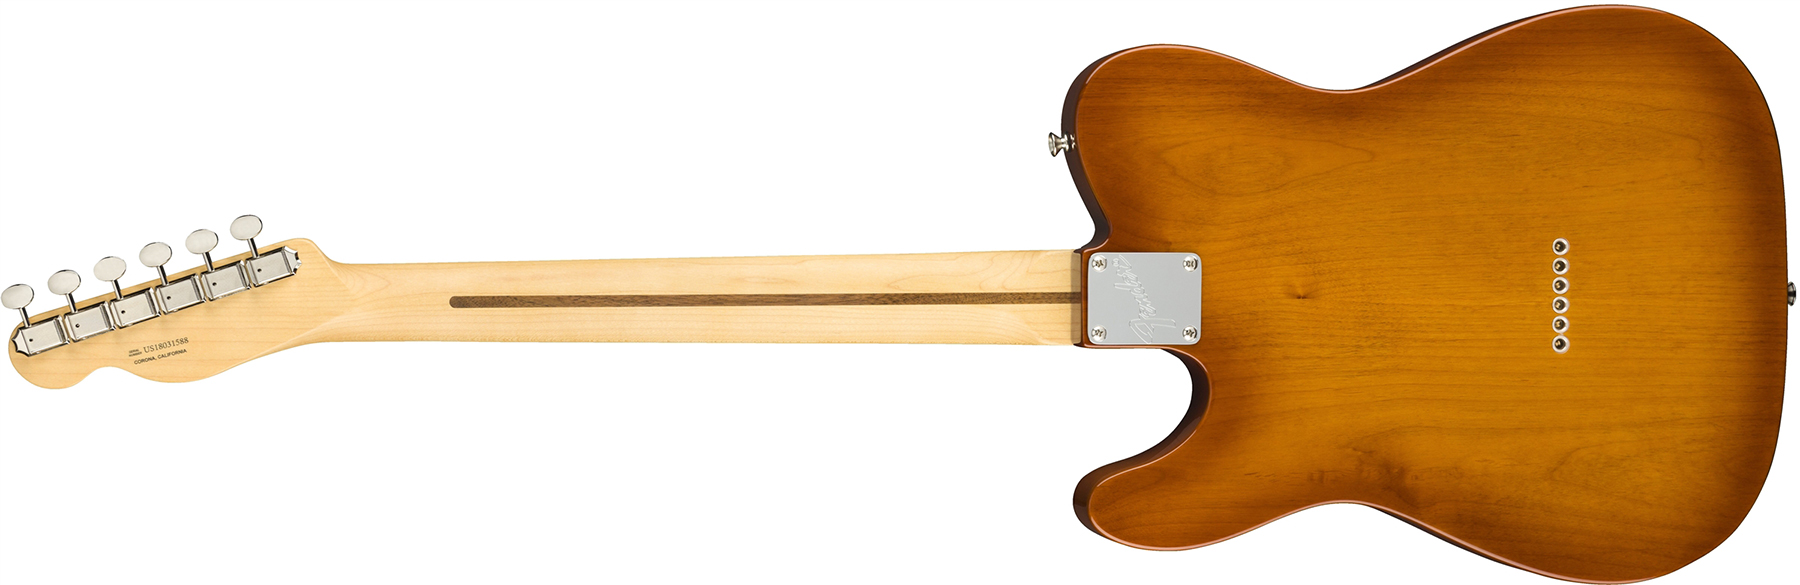 Fender Tele American Performer Usa Rw - Honey Burst - Tel shape electric guitar - Variation 1